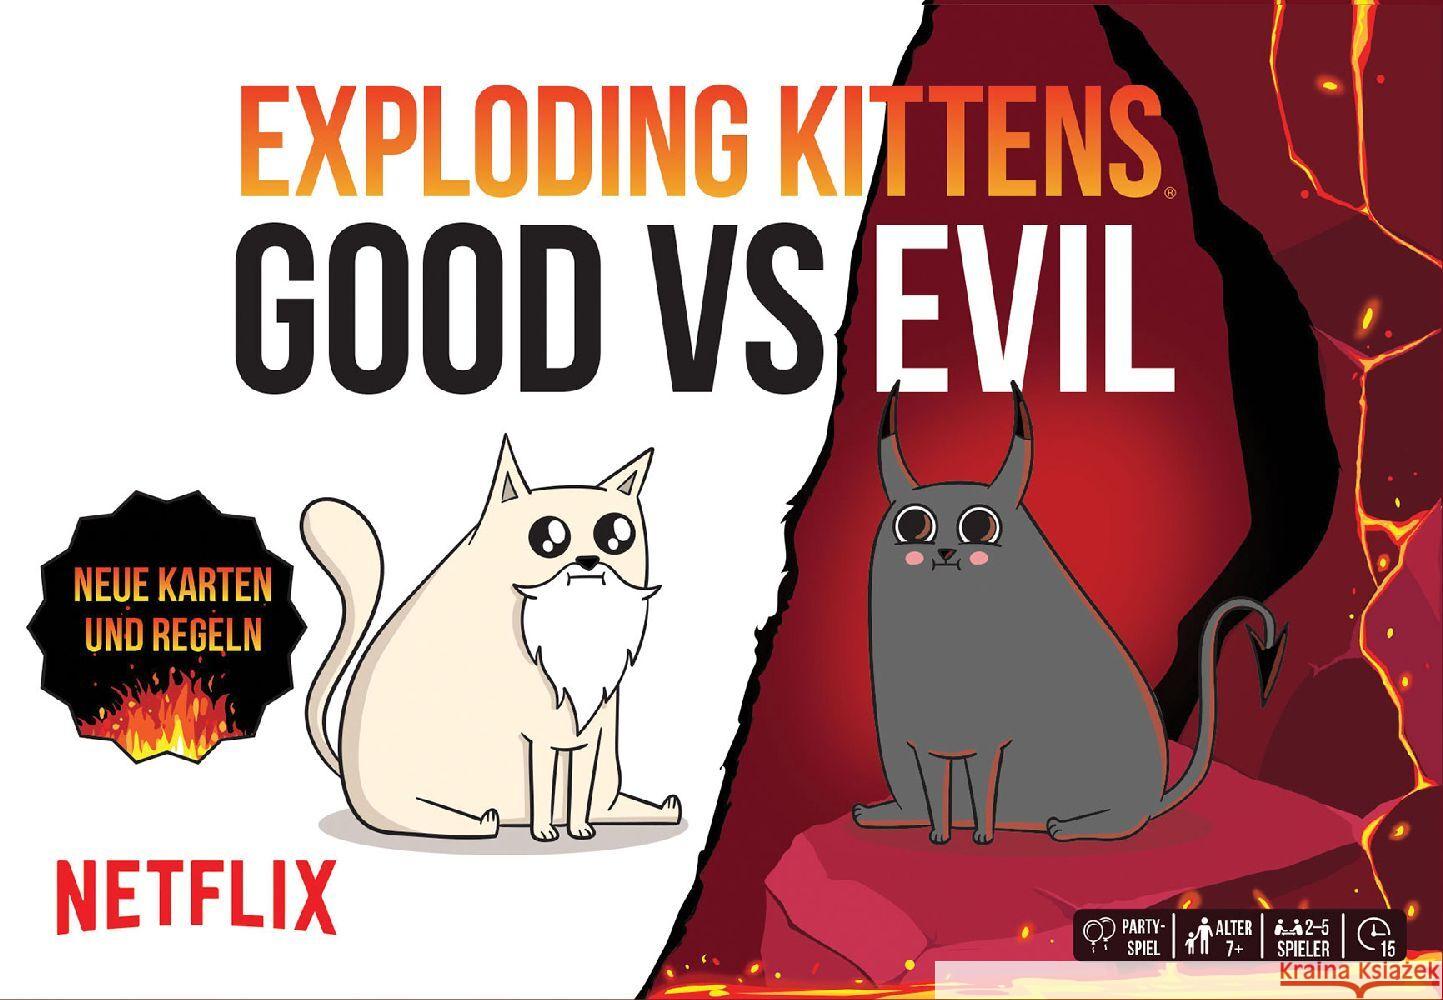 Exploding Kittens: Good vs. Evil Inman, Matthew, Small, Shane, Lee, Elan 0810083044712